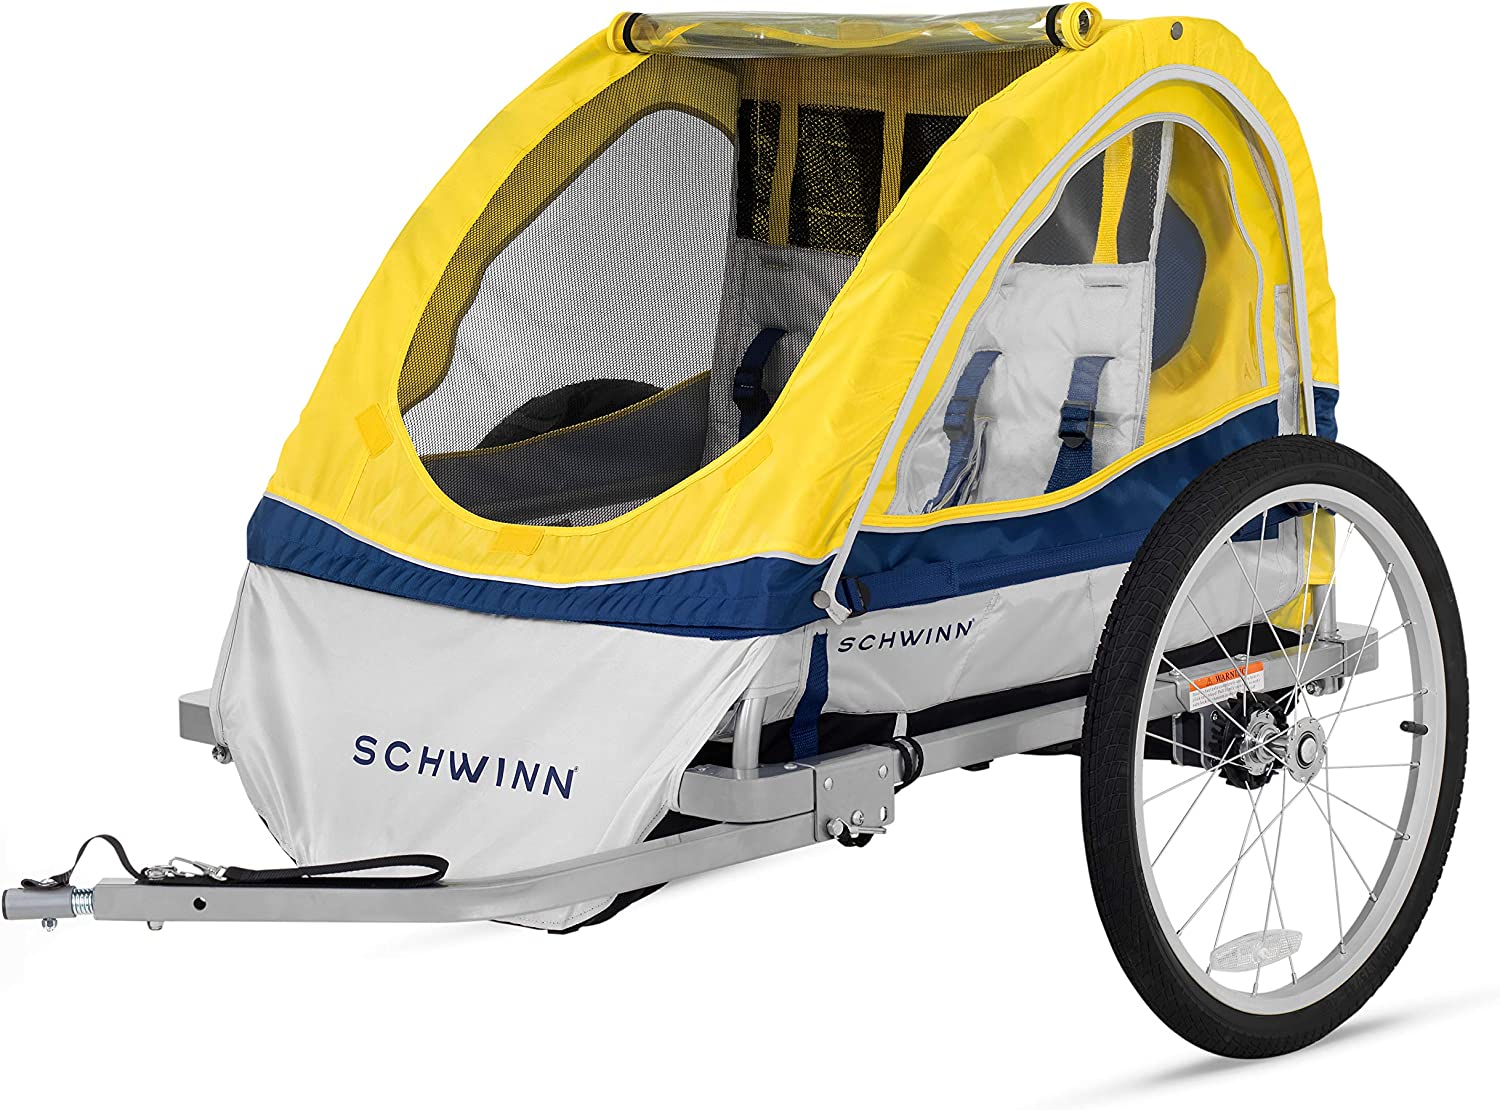 Schwinn Echo, and Trailblazer Child Bike Trailer, Single and Double Baby Carrier, Canopy, inch Wheels Echo - 2 Seat Bike Trailer Yellow - image 1 of 7